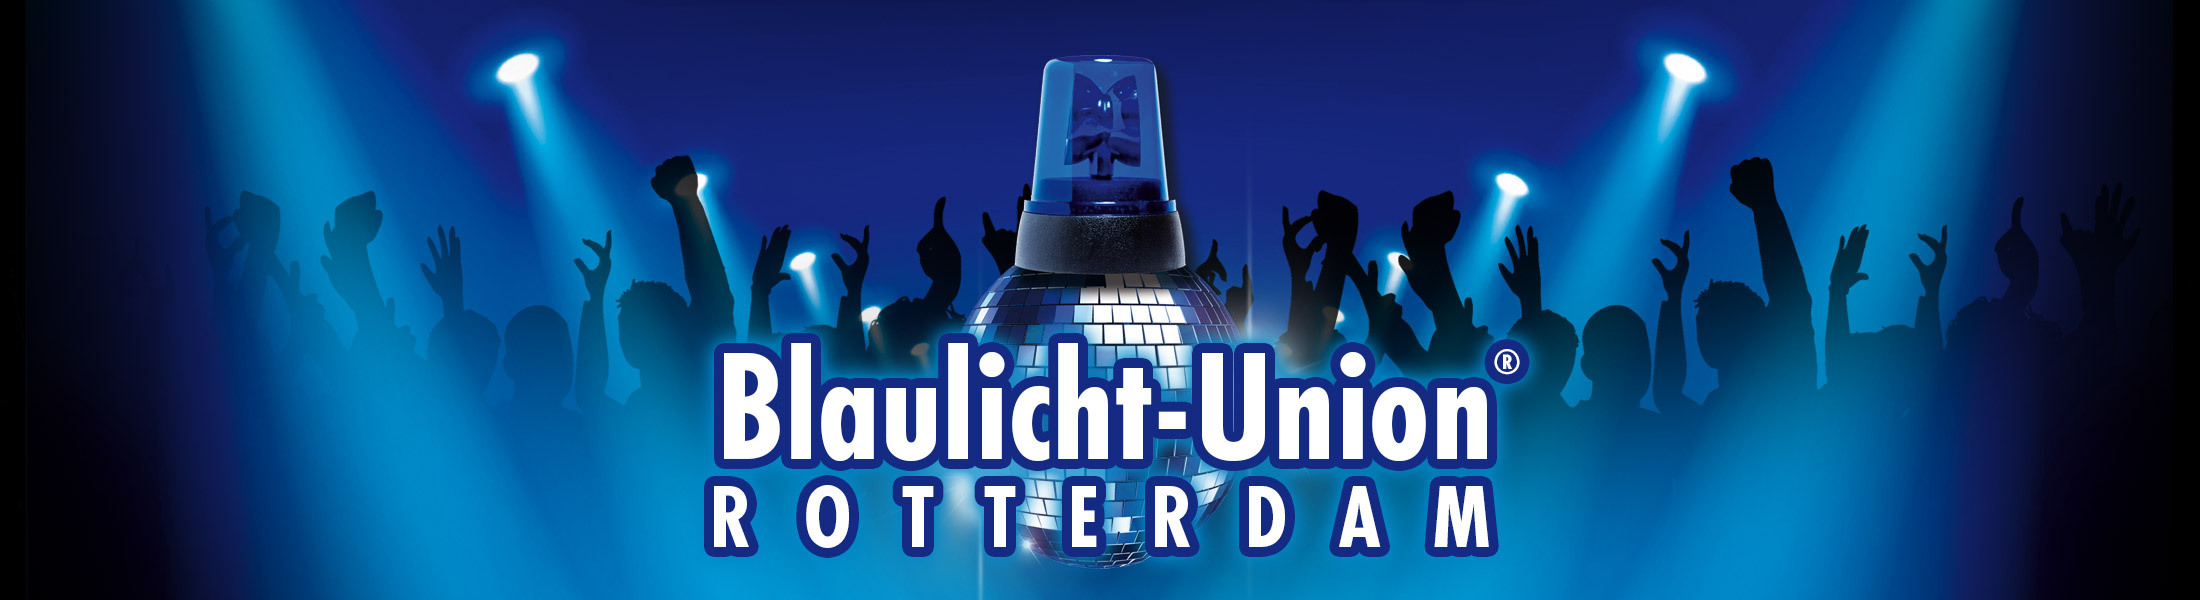 Blaulicht Union Party® Rotterdam